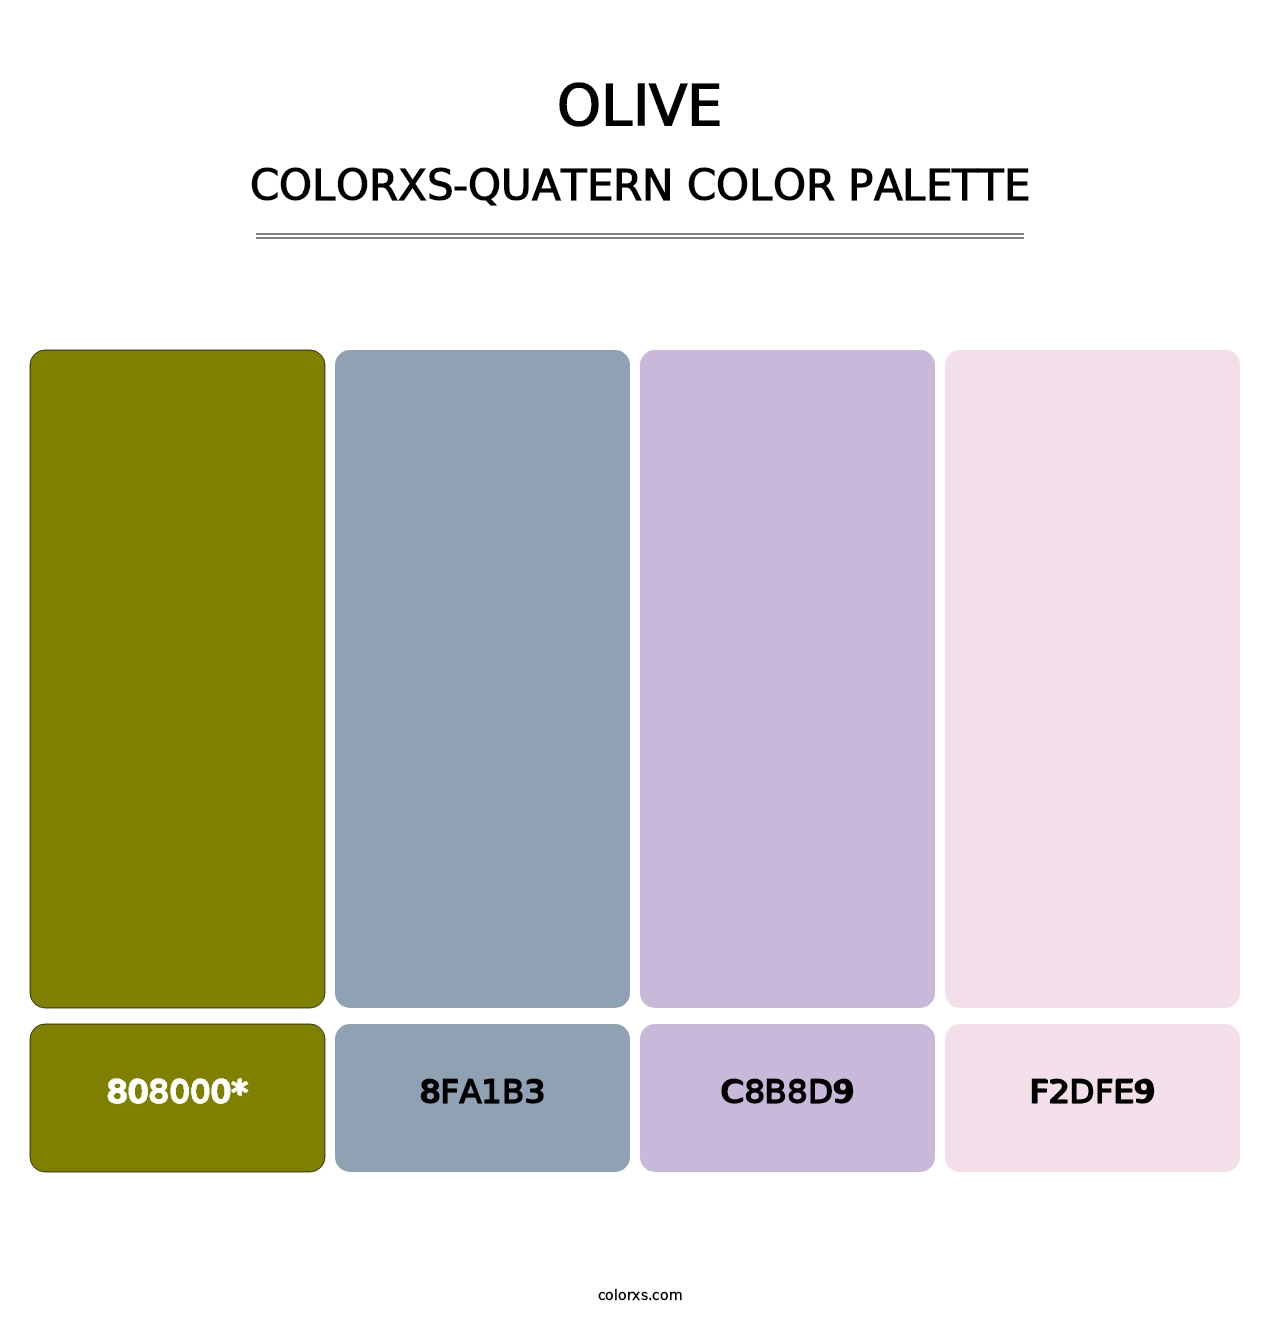 Olive - Colorxs Quatern Palette